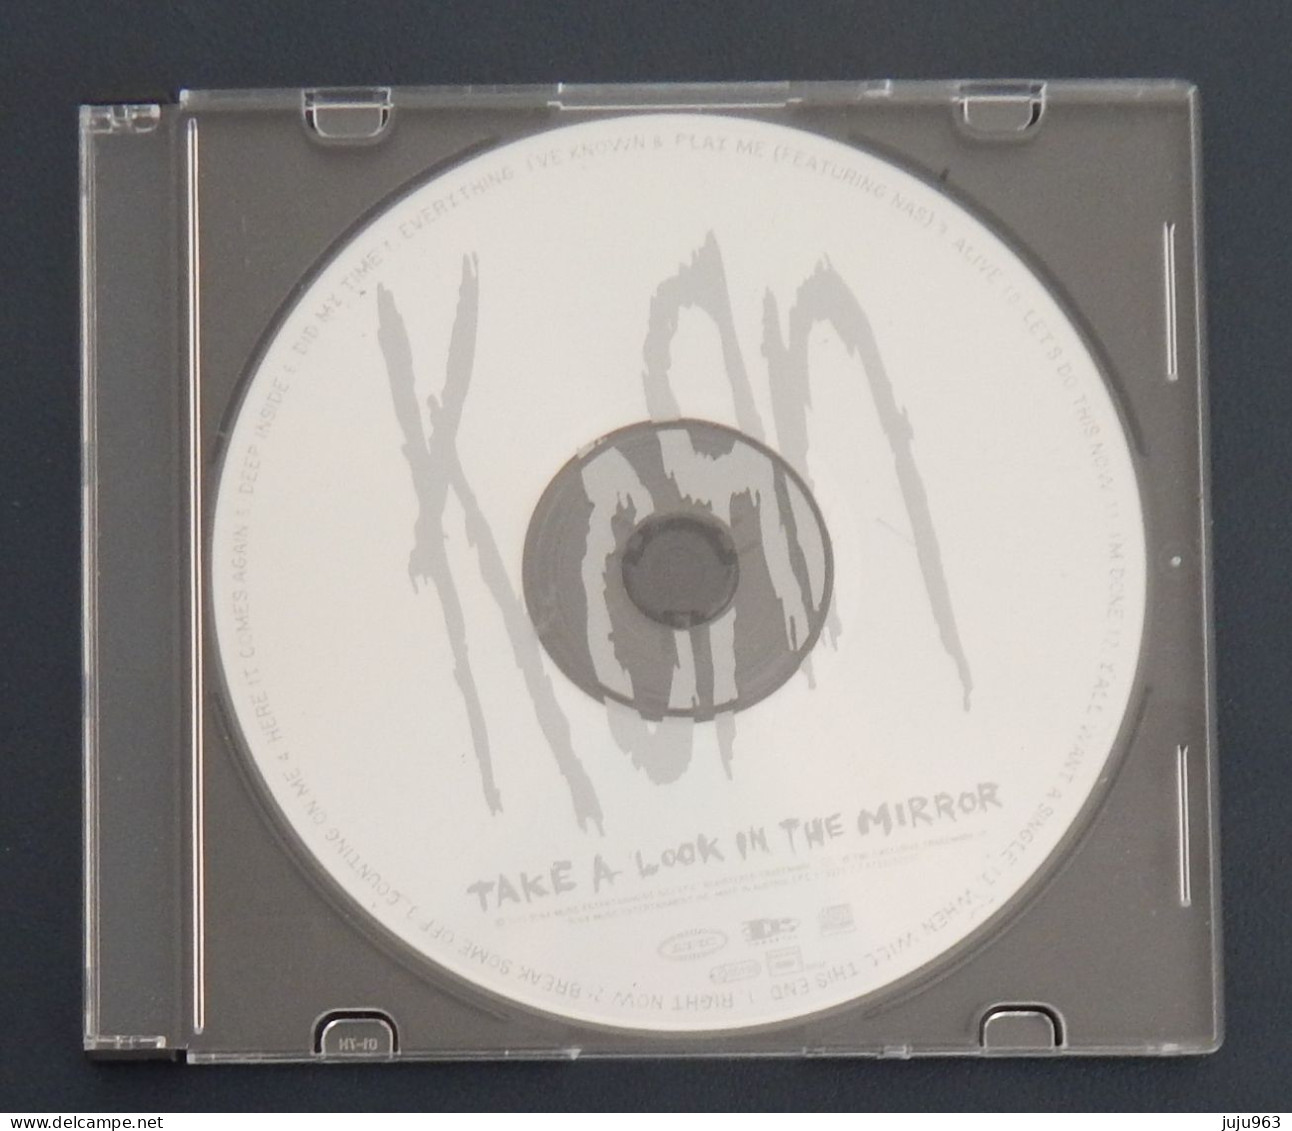 CD KORN "TAKE A LOOK IN THE MIRROR"  BON ETAT PAS DE JAQUETTE - Hard Rock & Metal